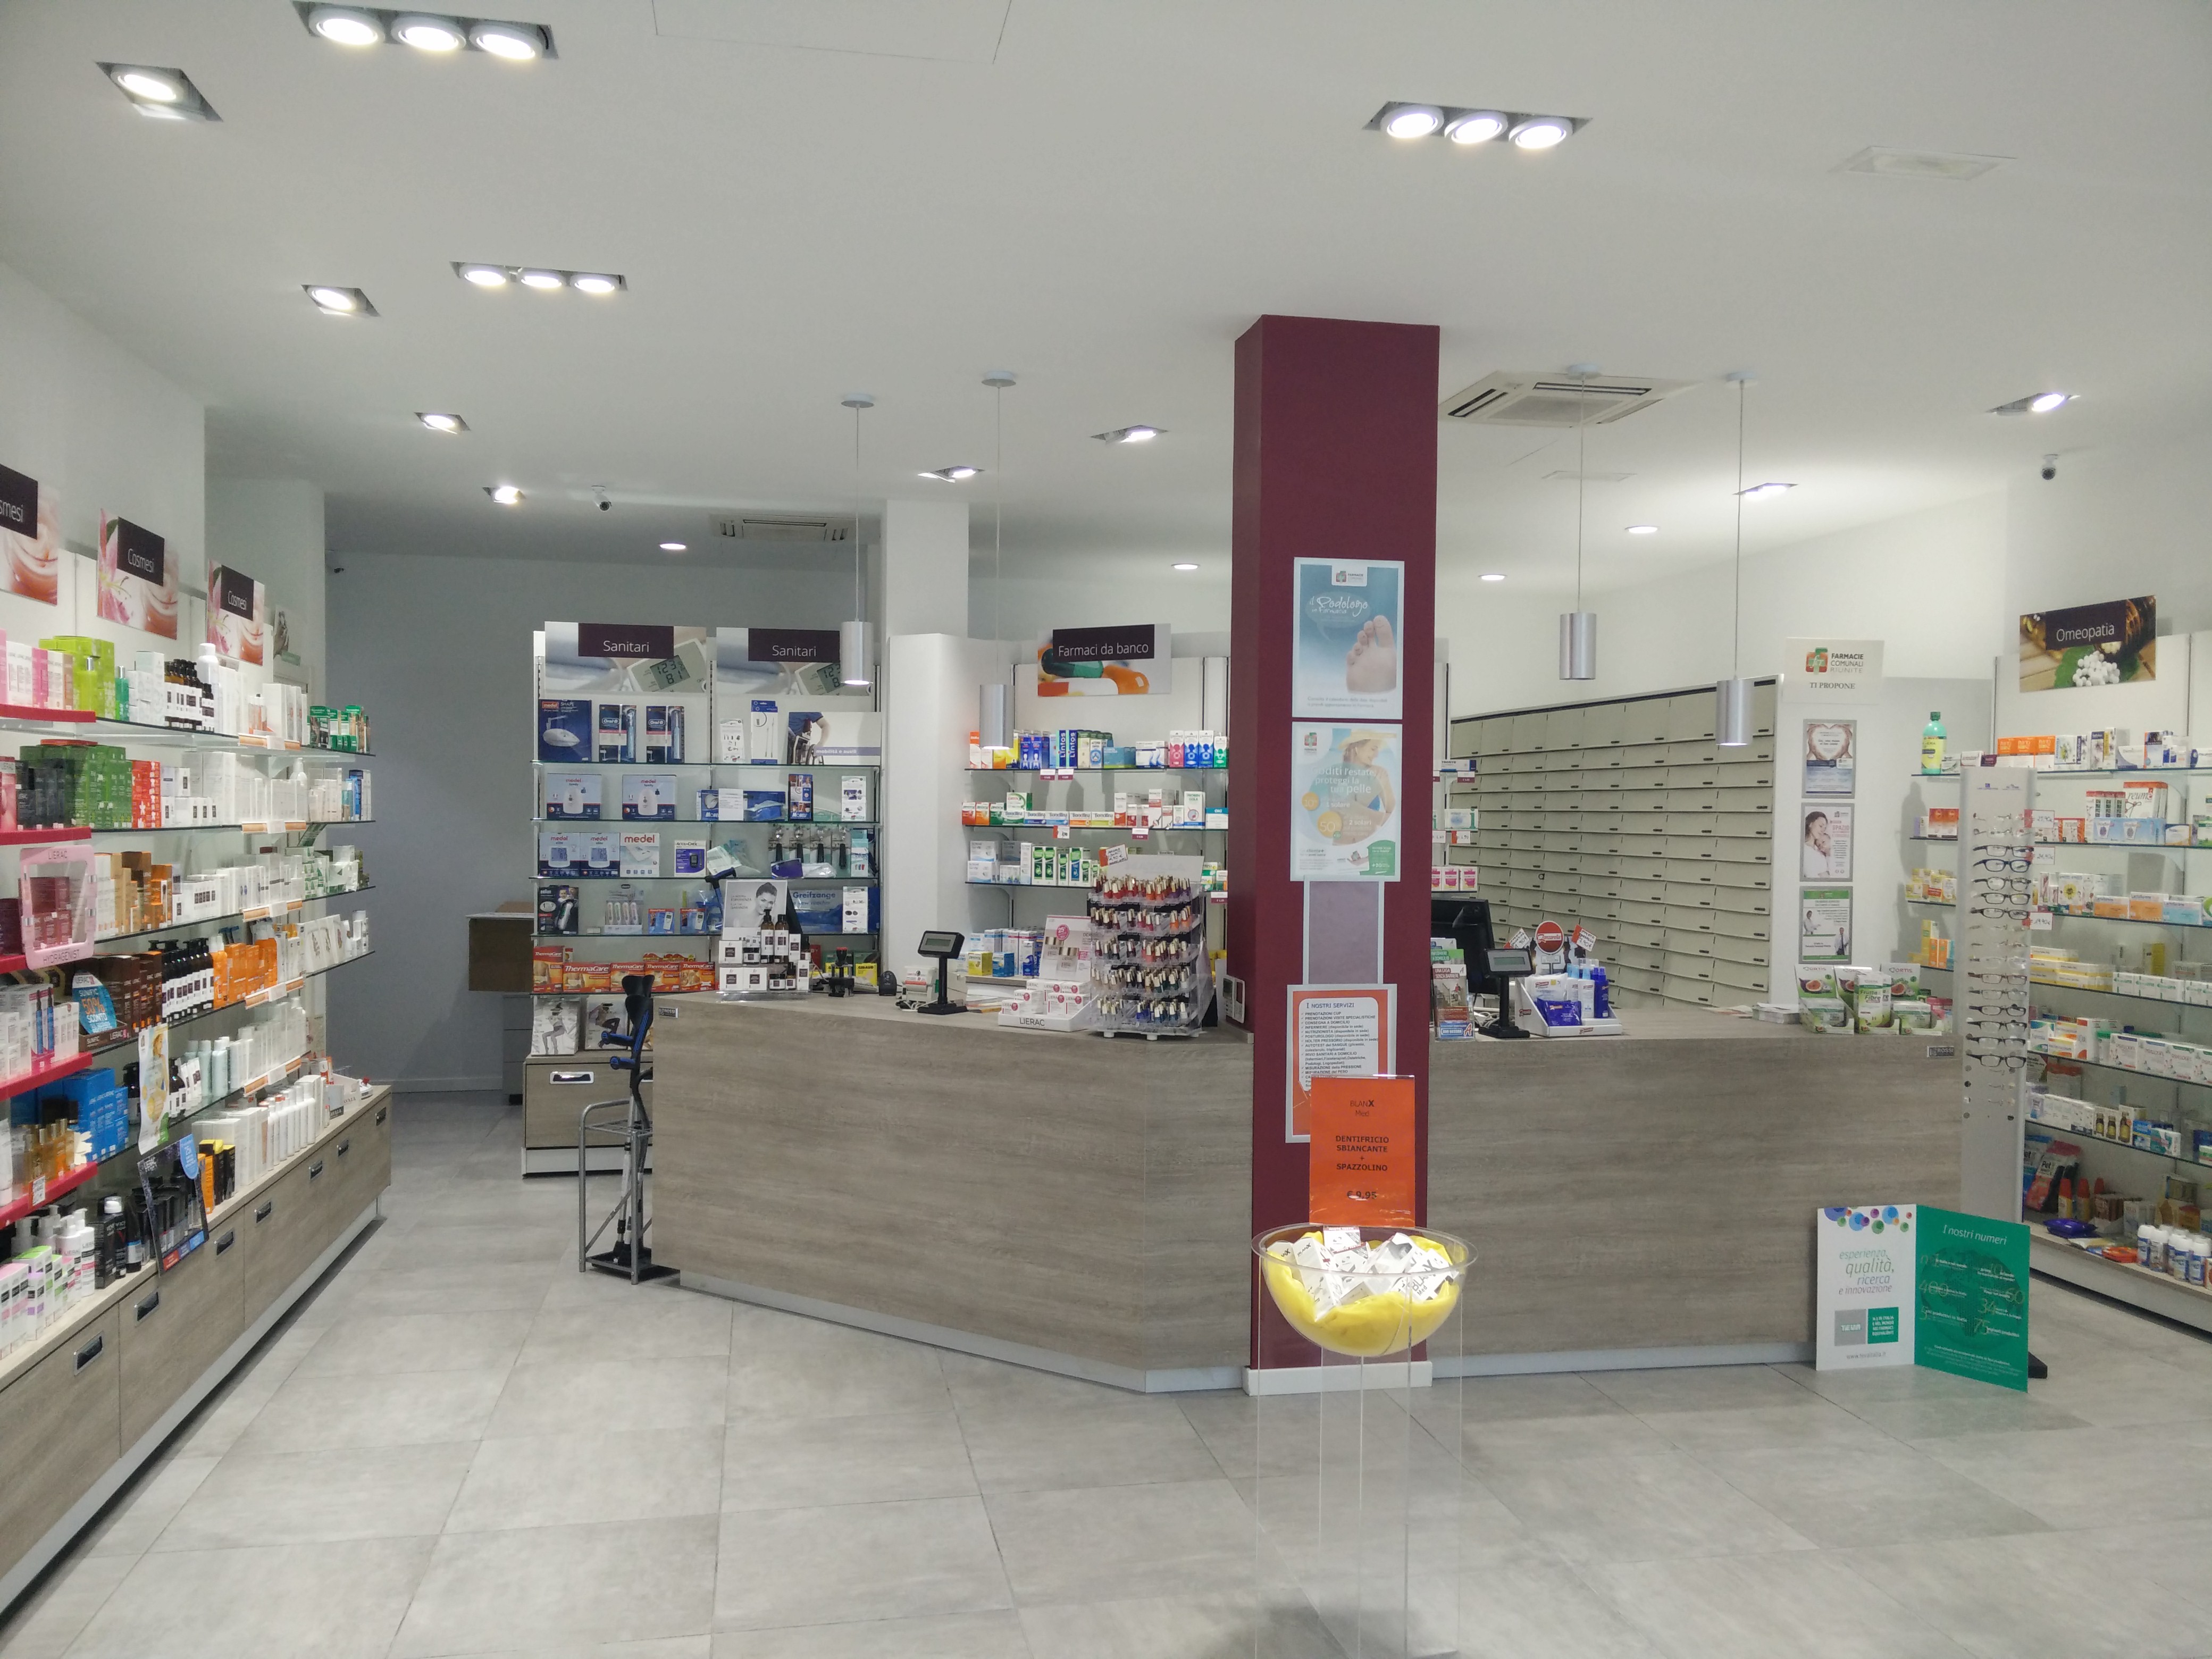 Farmacia all'Angelo